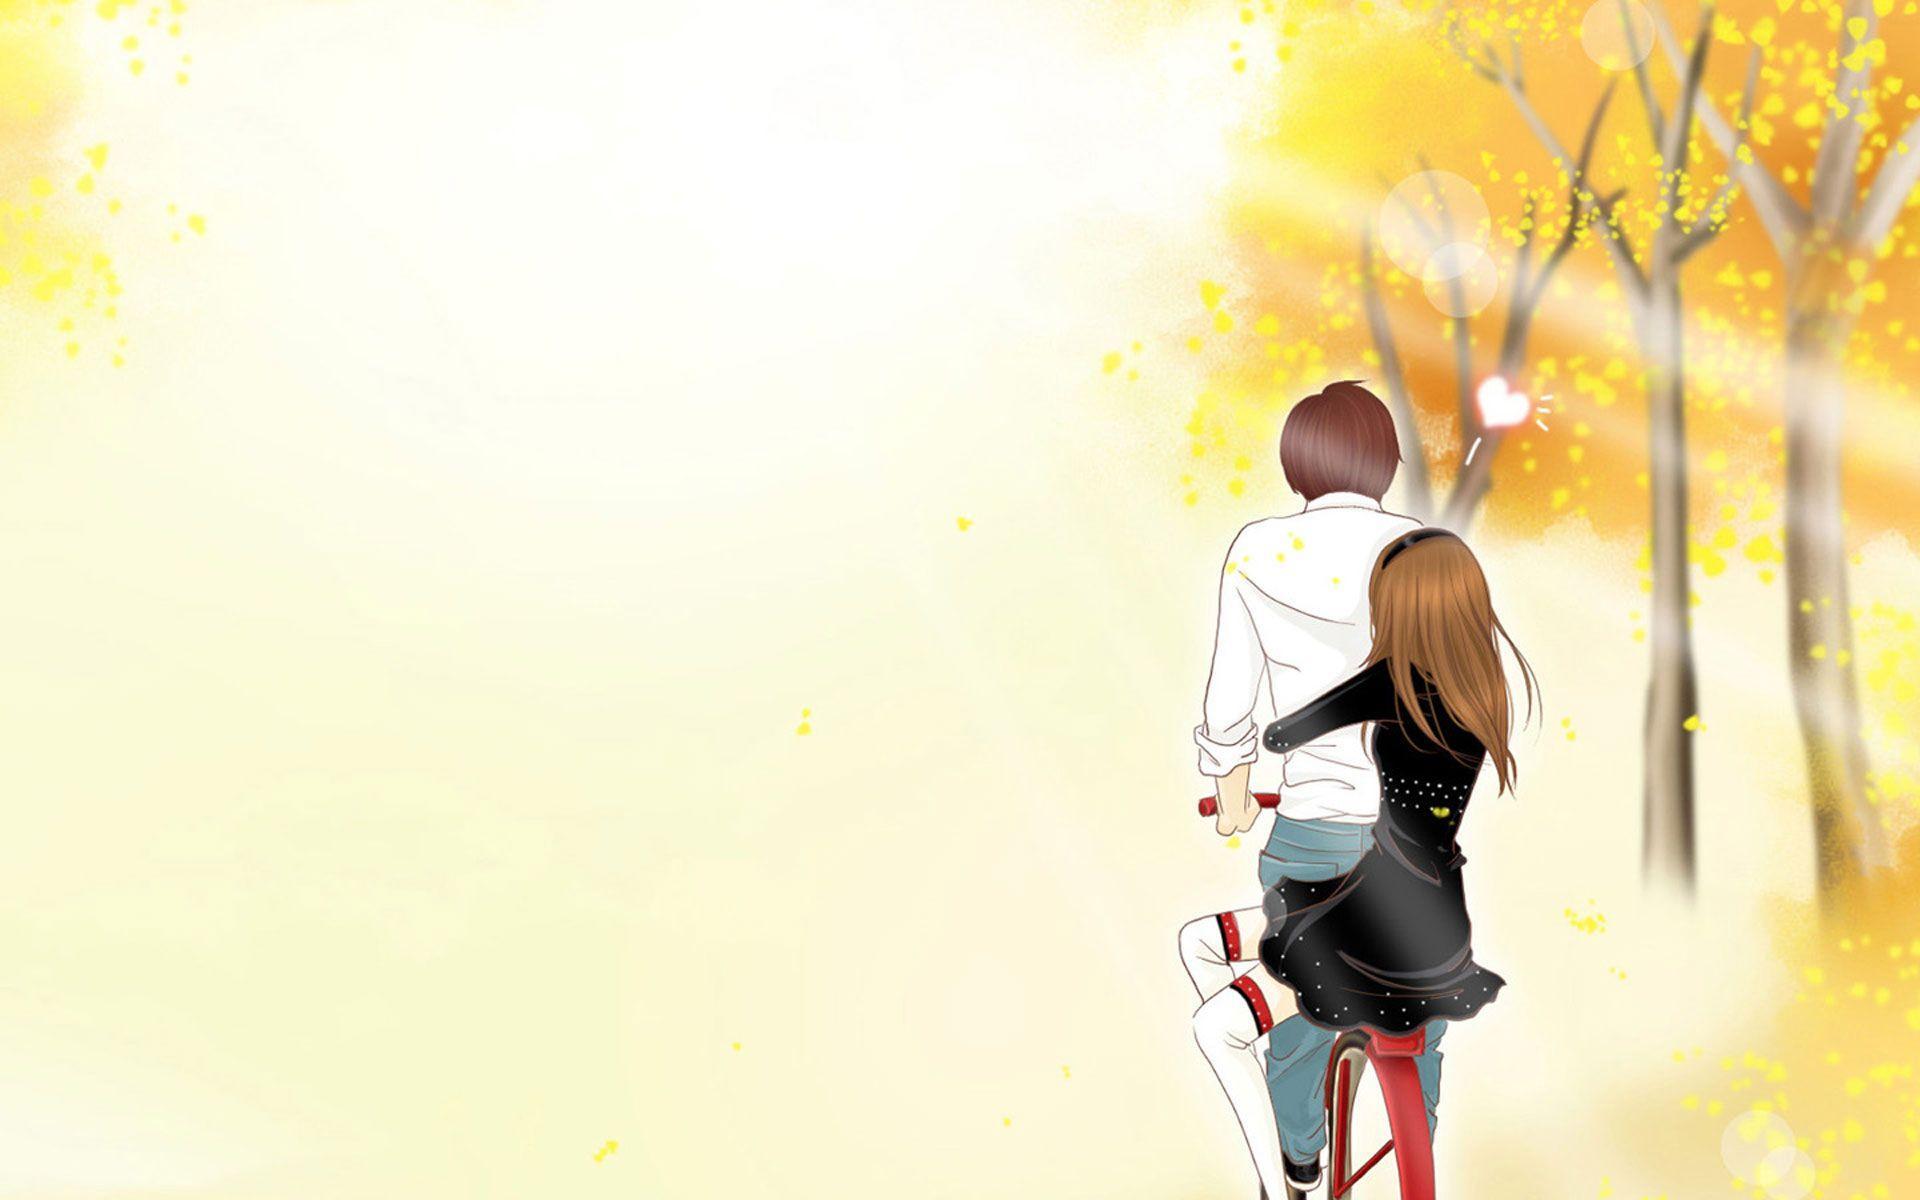 Romantic journey anime wallpaper comics desktop background